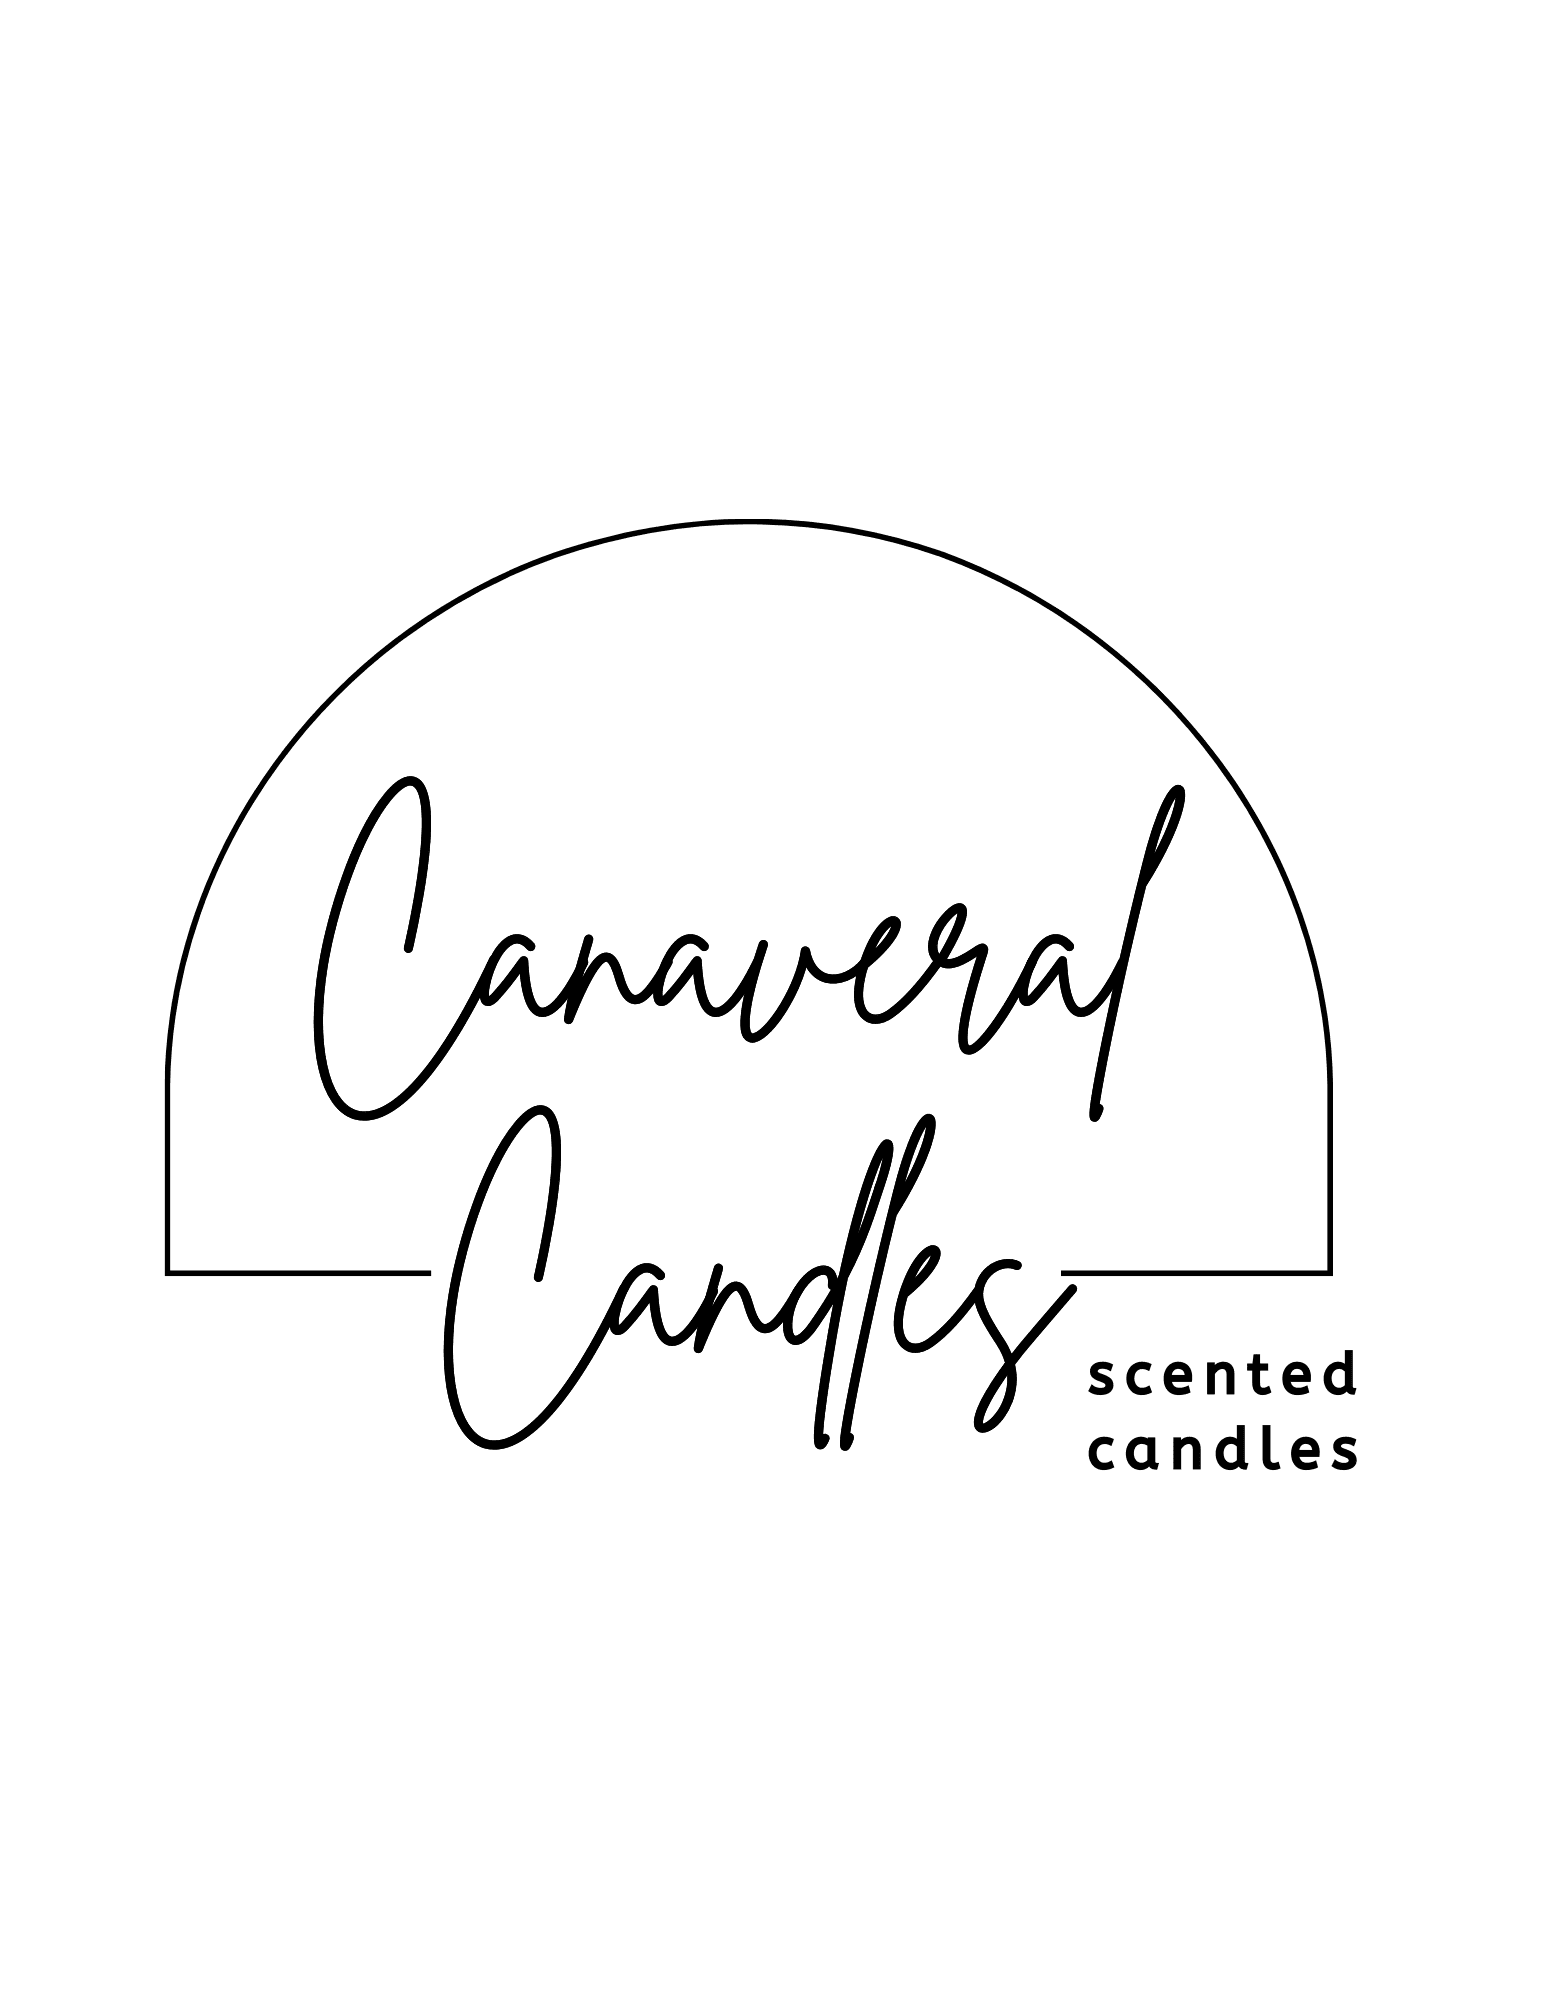 Canaveral Candles LLC